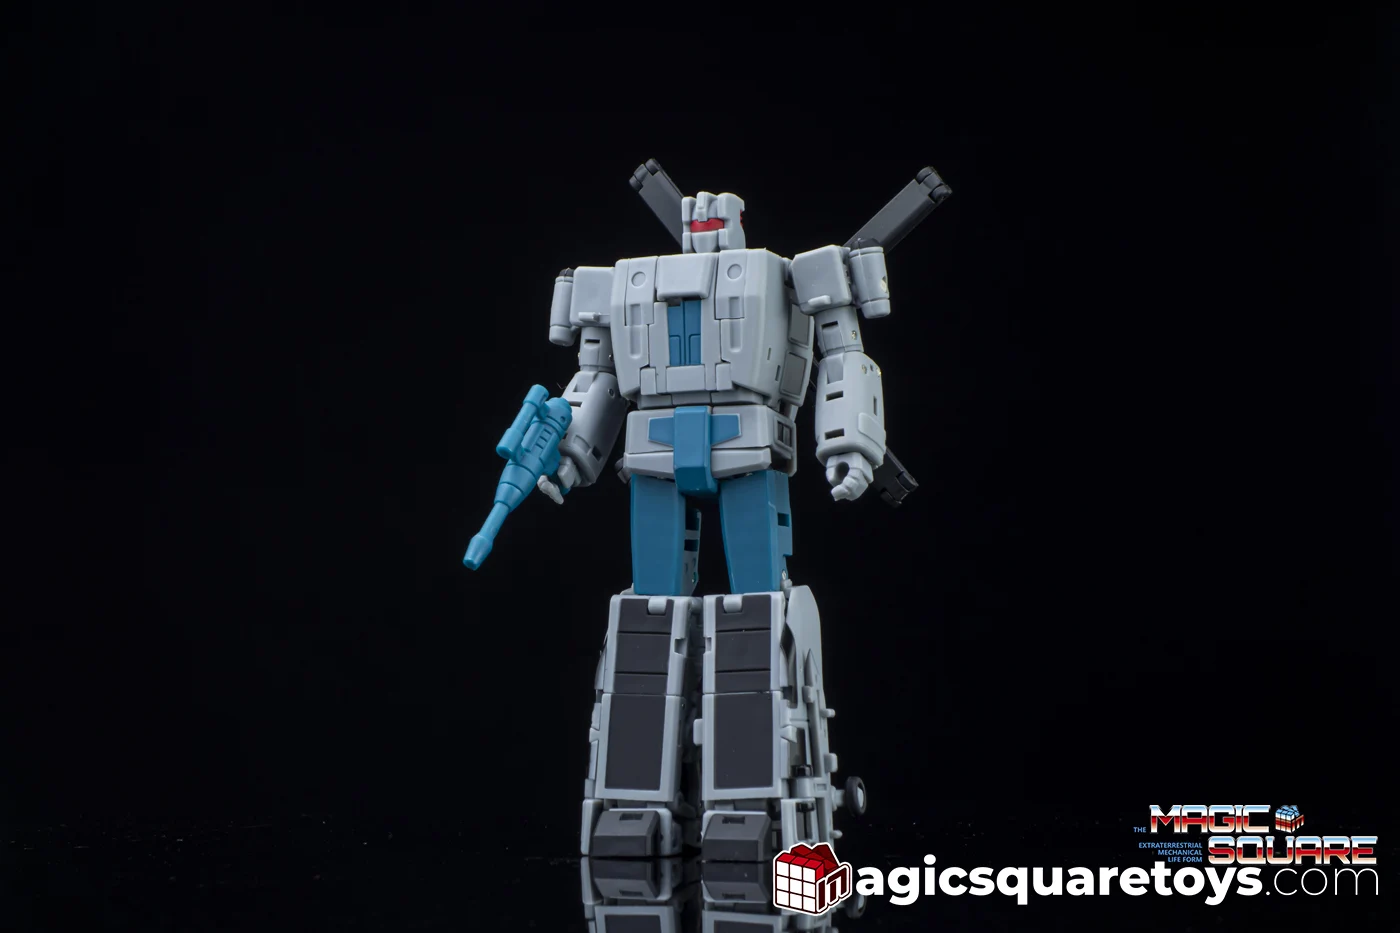 Magic Square Toys MS-B54 Tornado, Transformers Vortex homage, 4th member of the Bruticus homage.